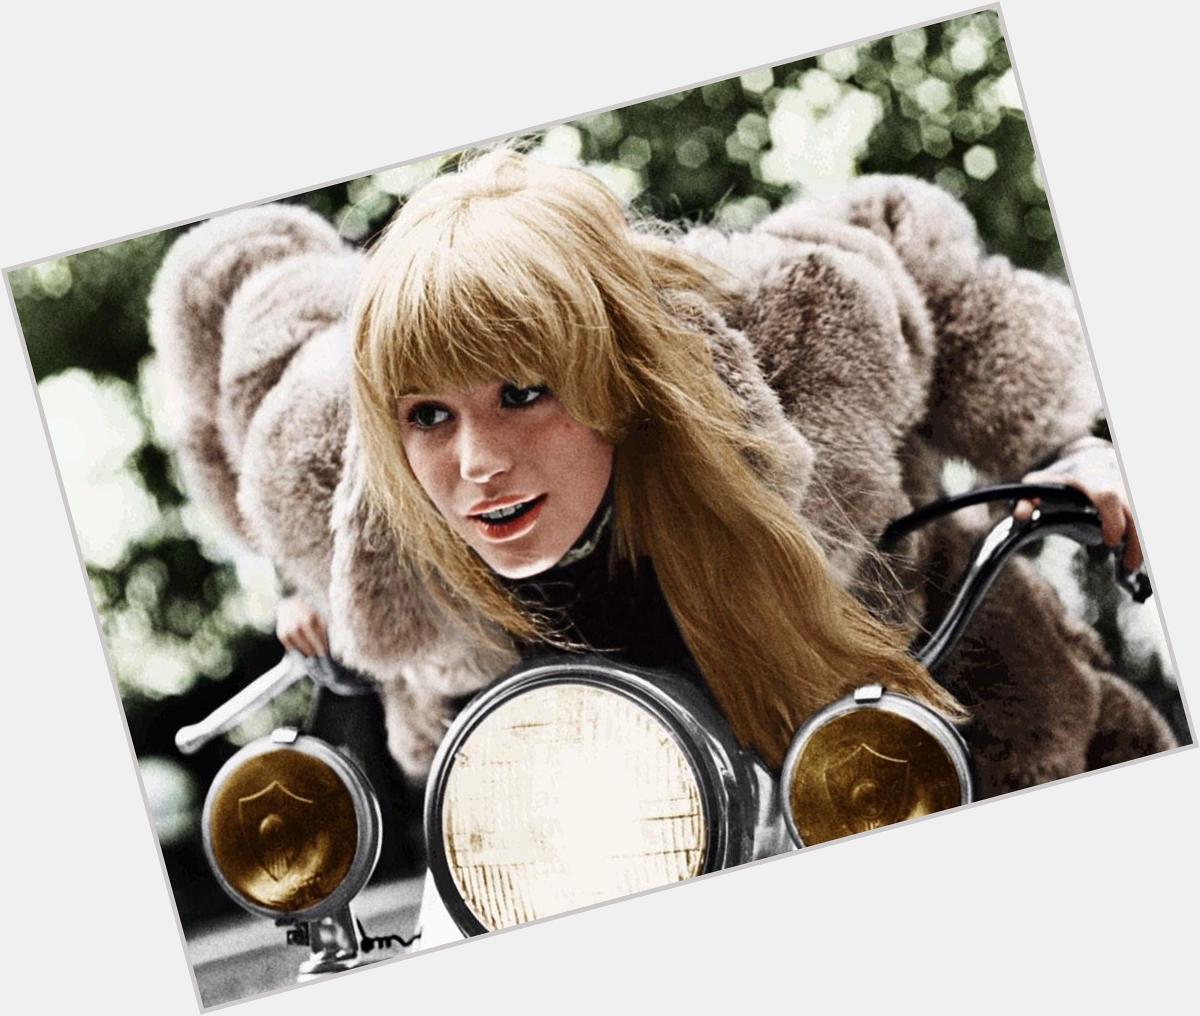   Happy Birthday Marianne Faithfull
\The Girl on a Motorcycle\ 1968 